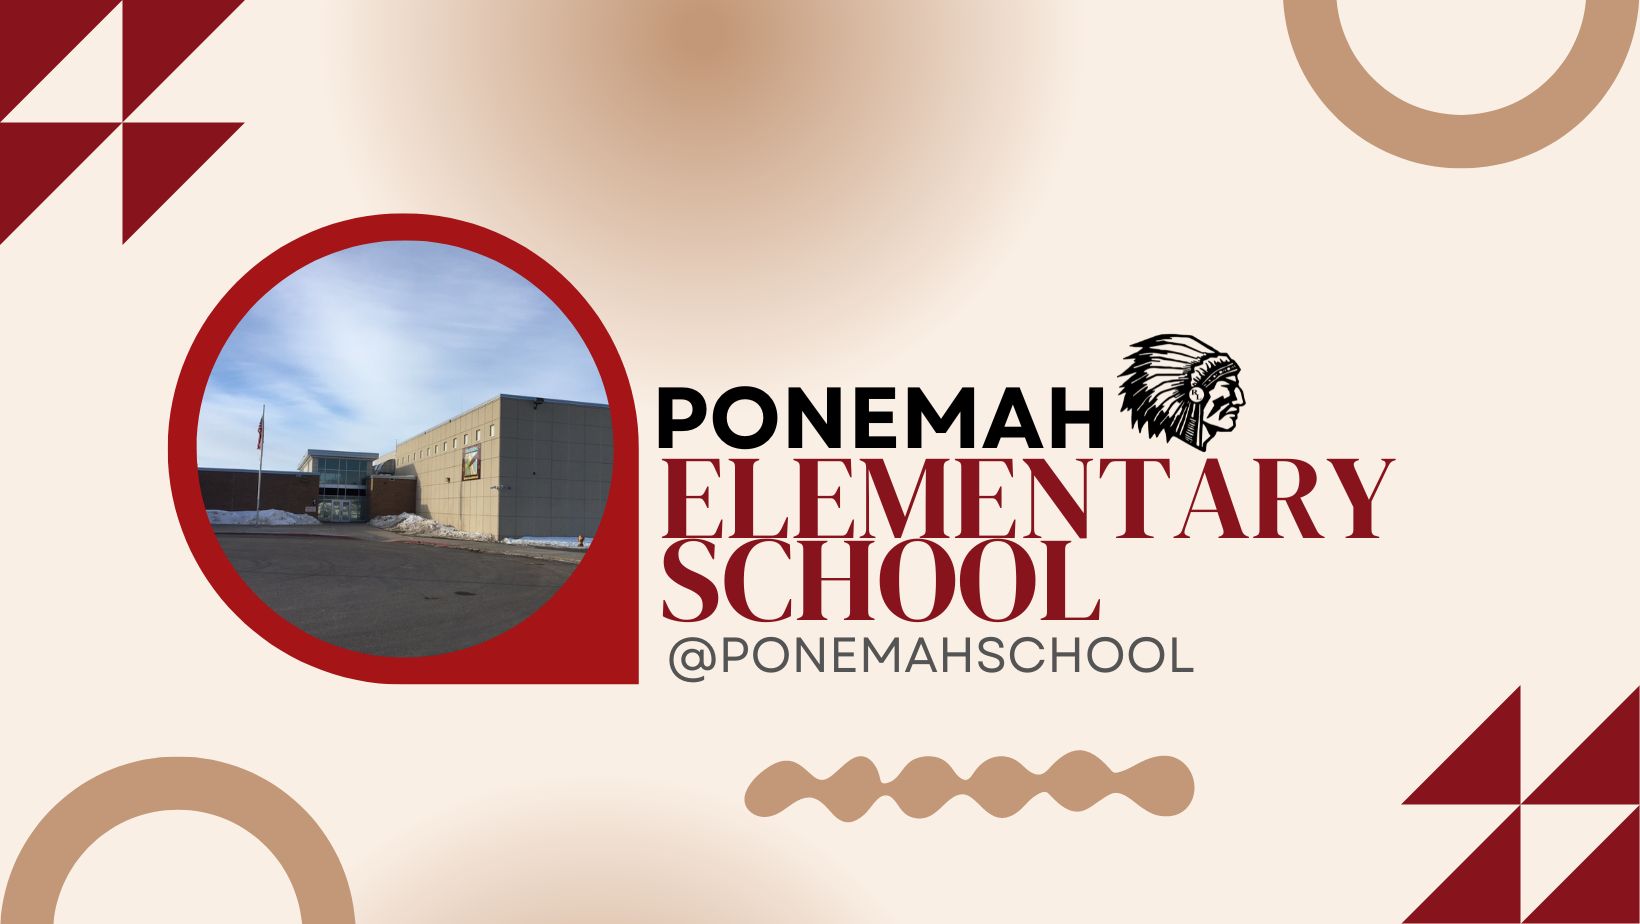 Ponemah Elementary School